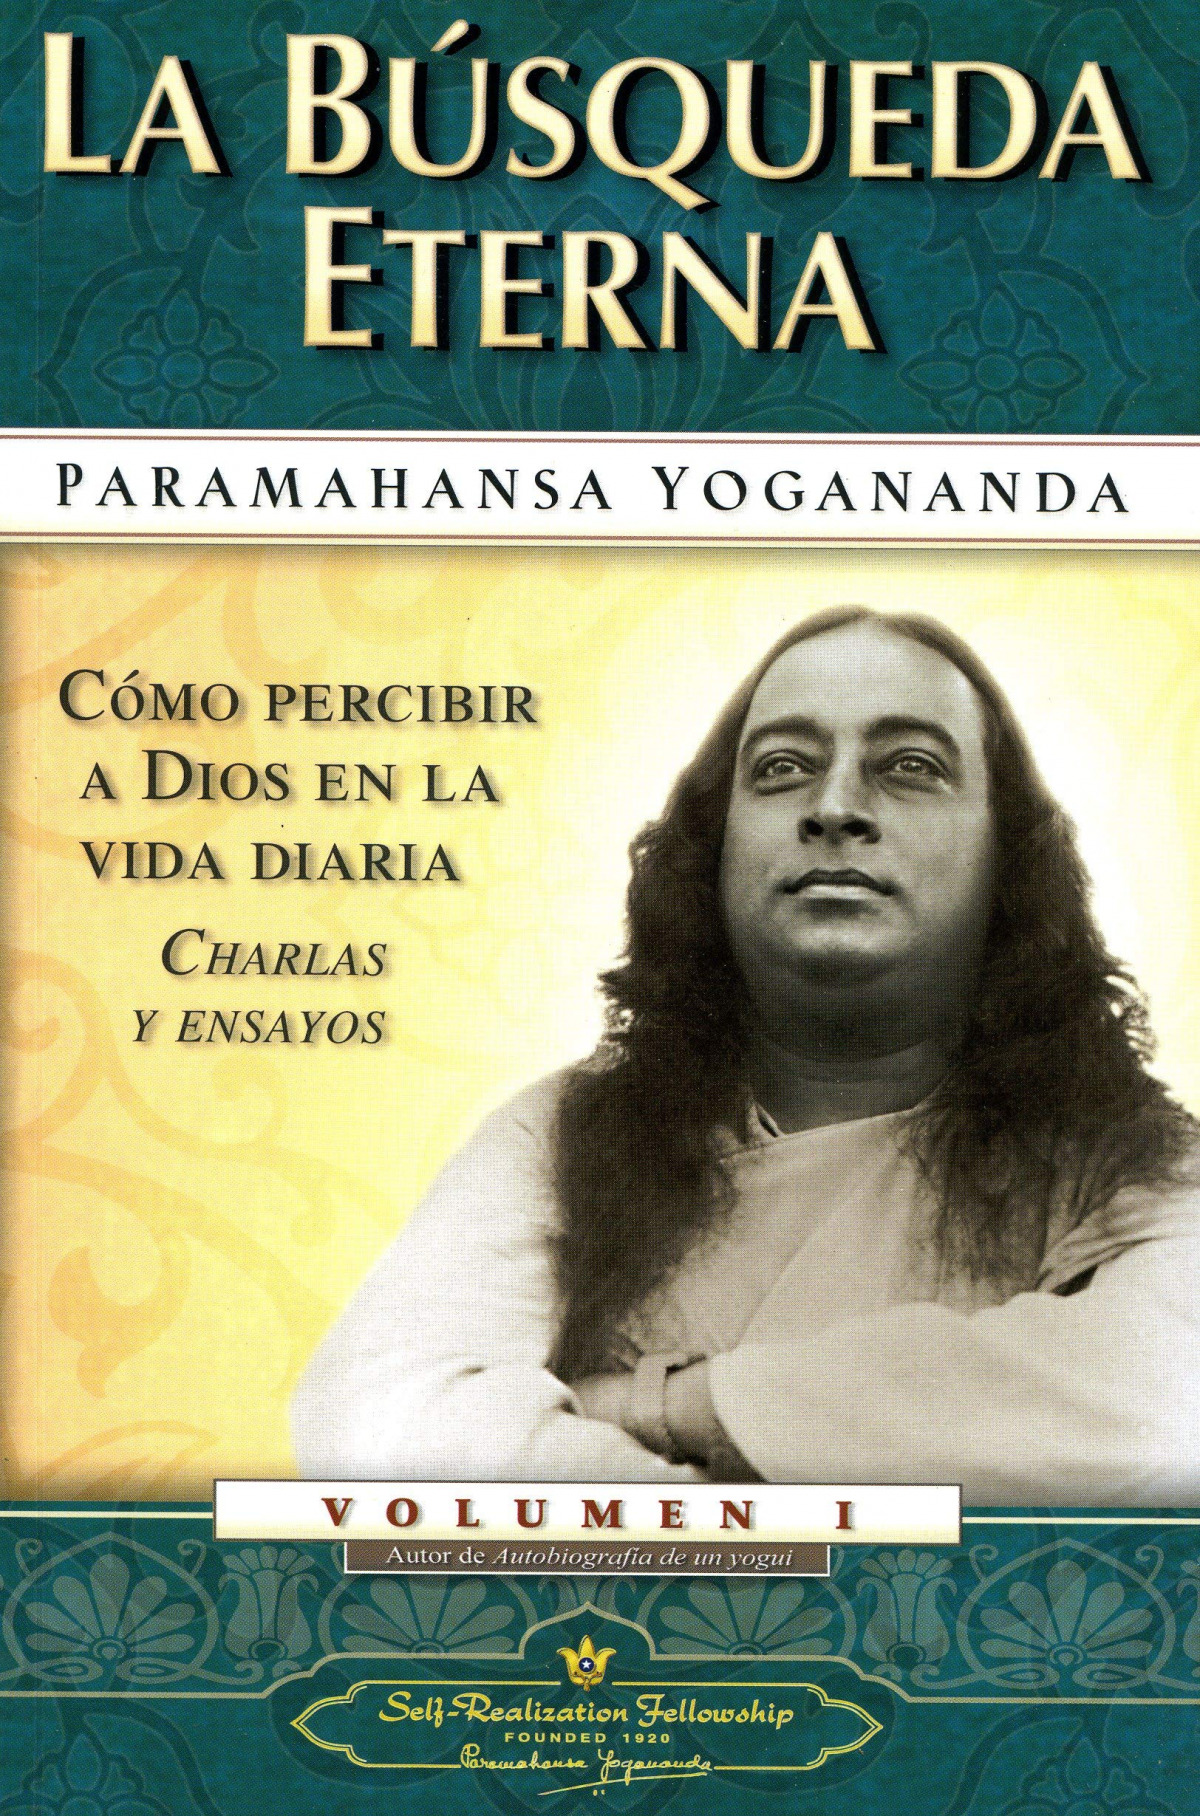 La busqueda eterna - Paramahansa, Yogananda